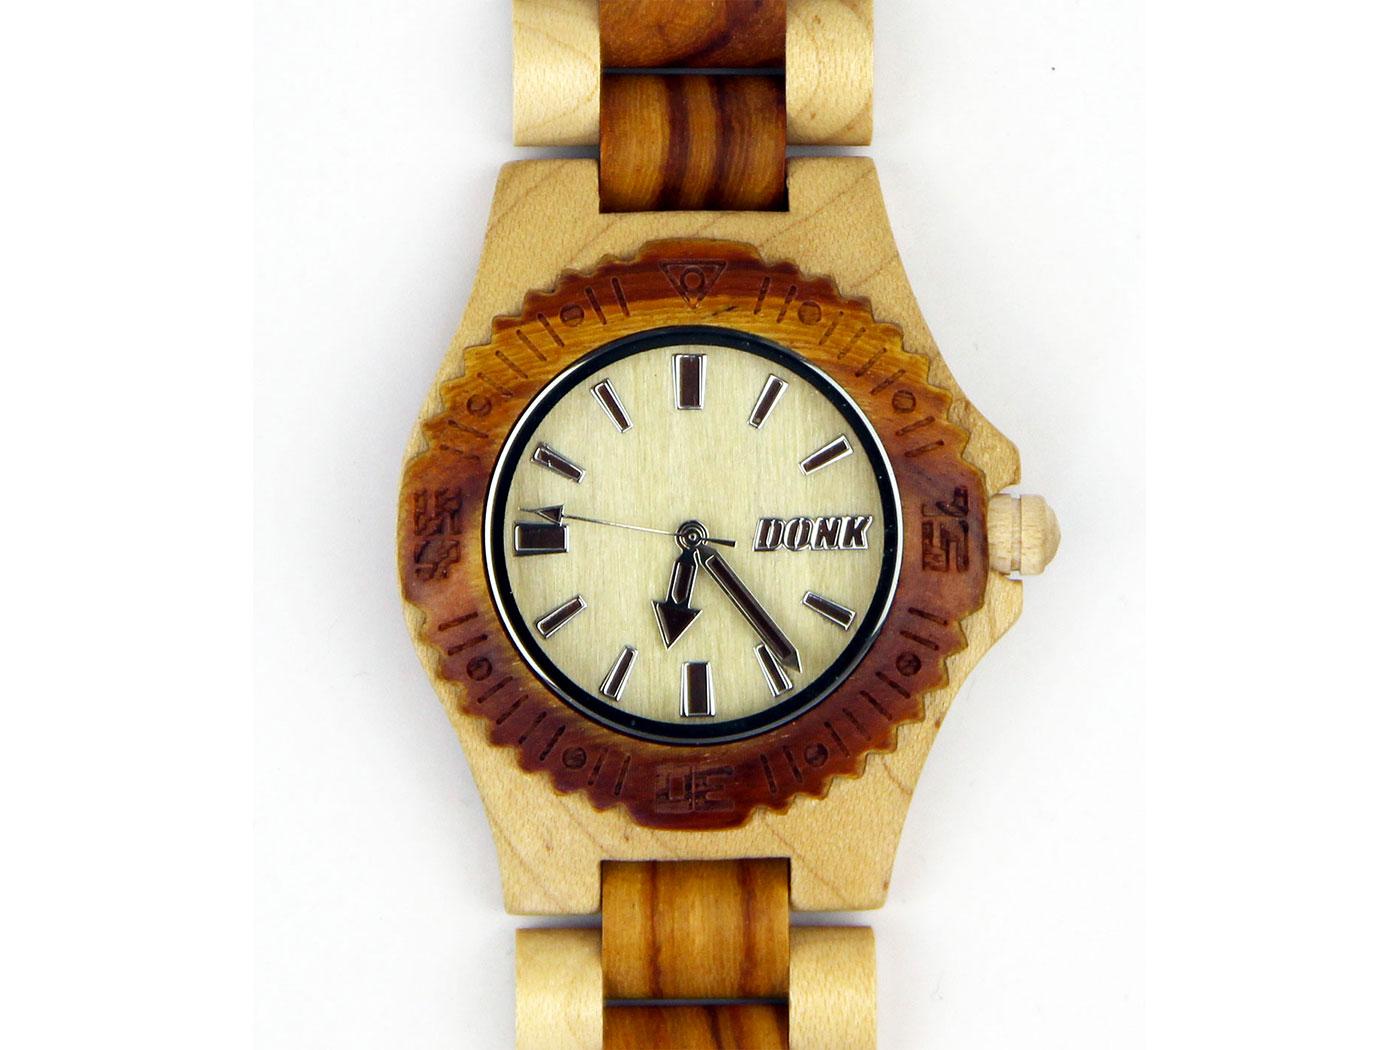 DONK Wood Watch in Retro 70s Hybrid Brown DK03